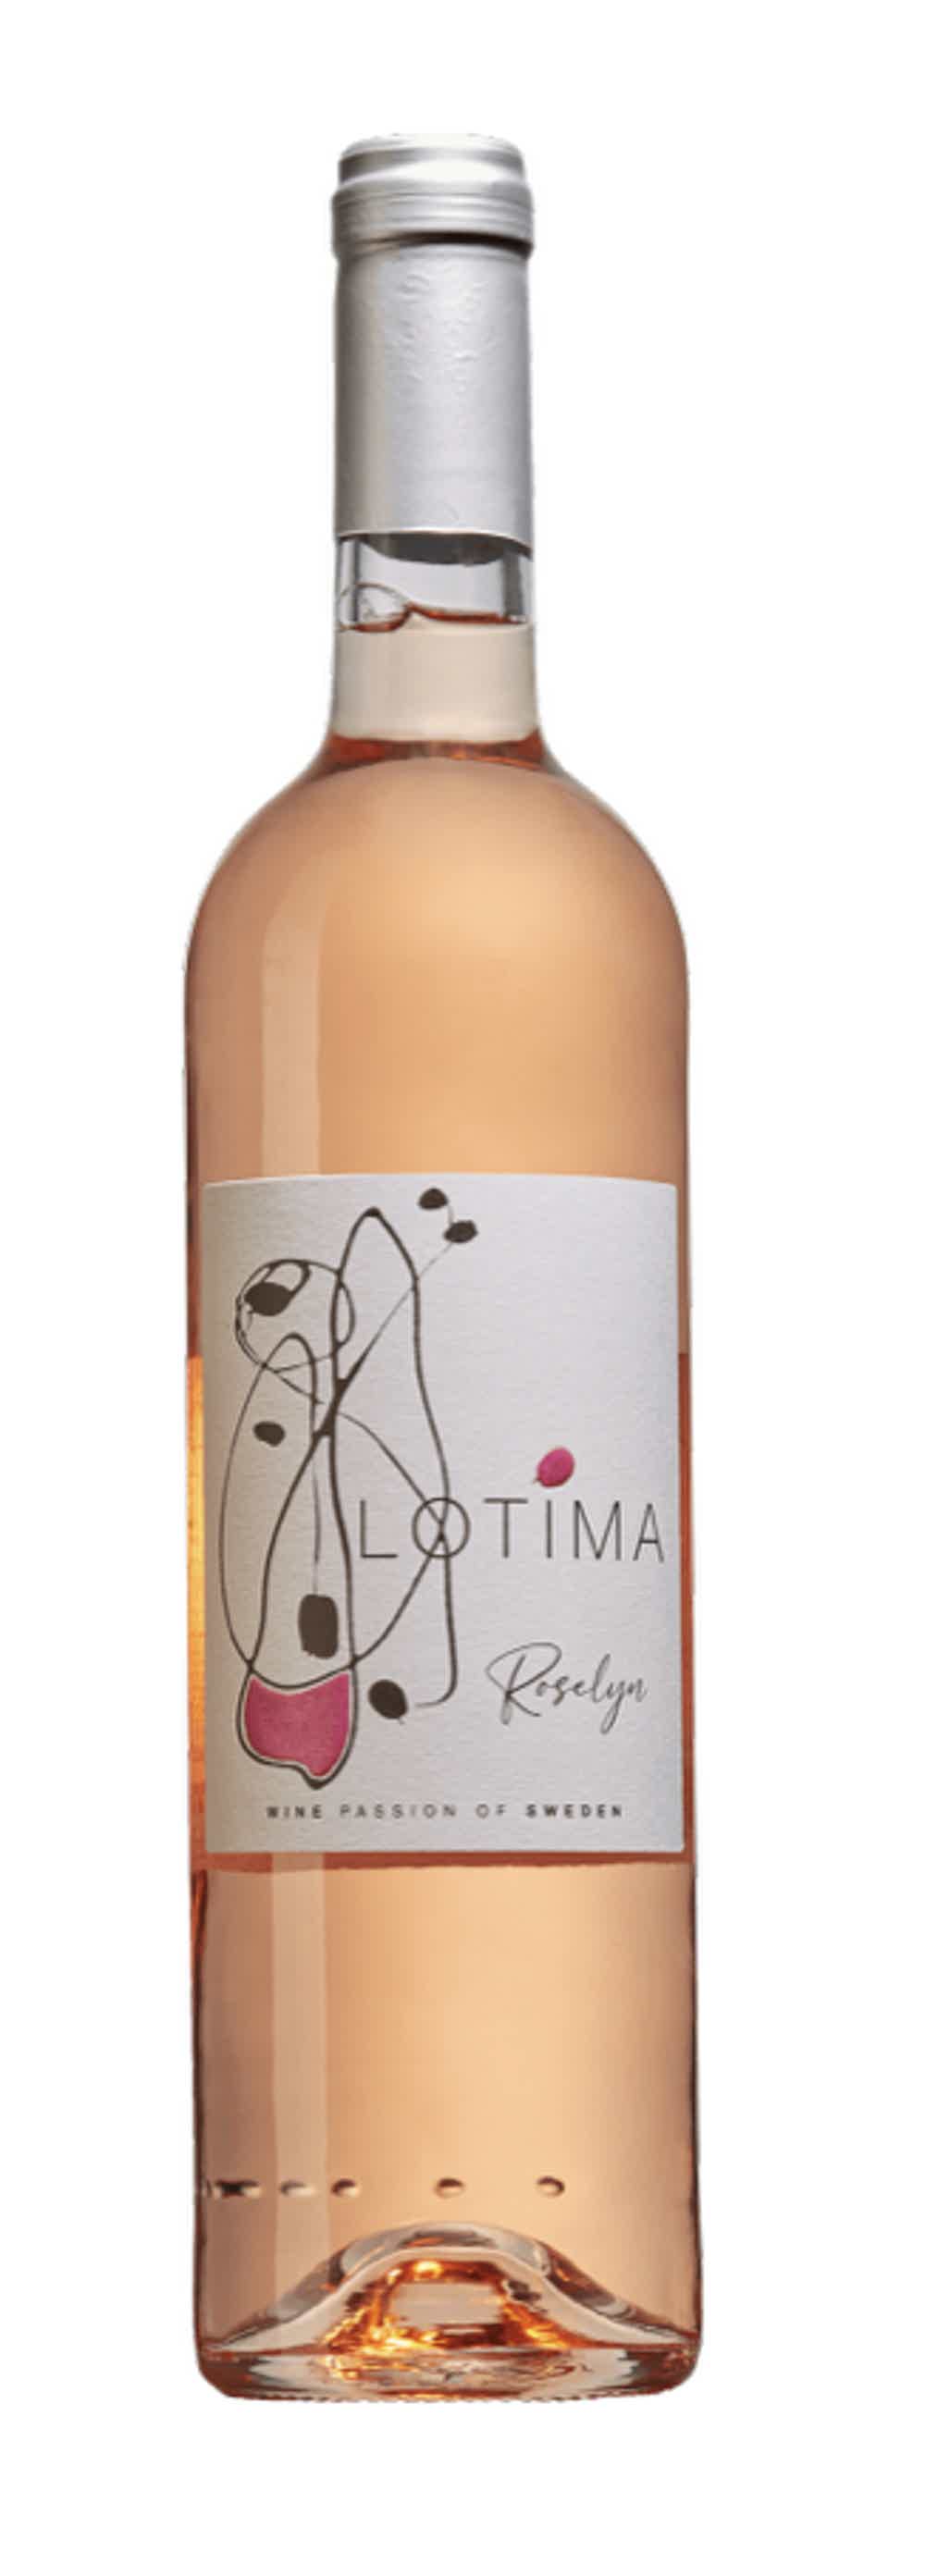 Lotima Roselyn 12.0% 0.75L, Wine